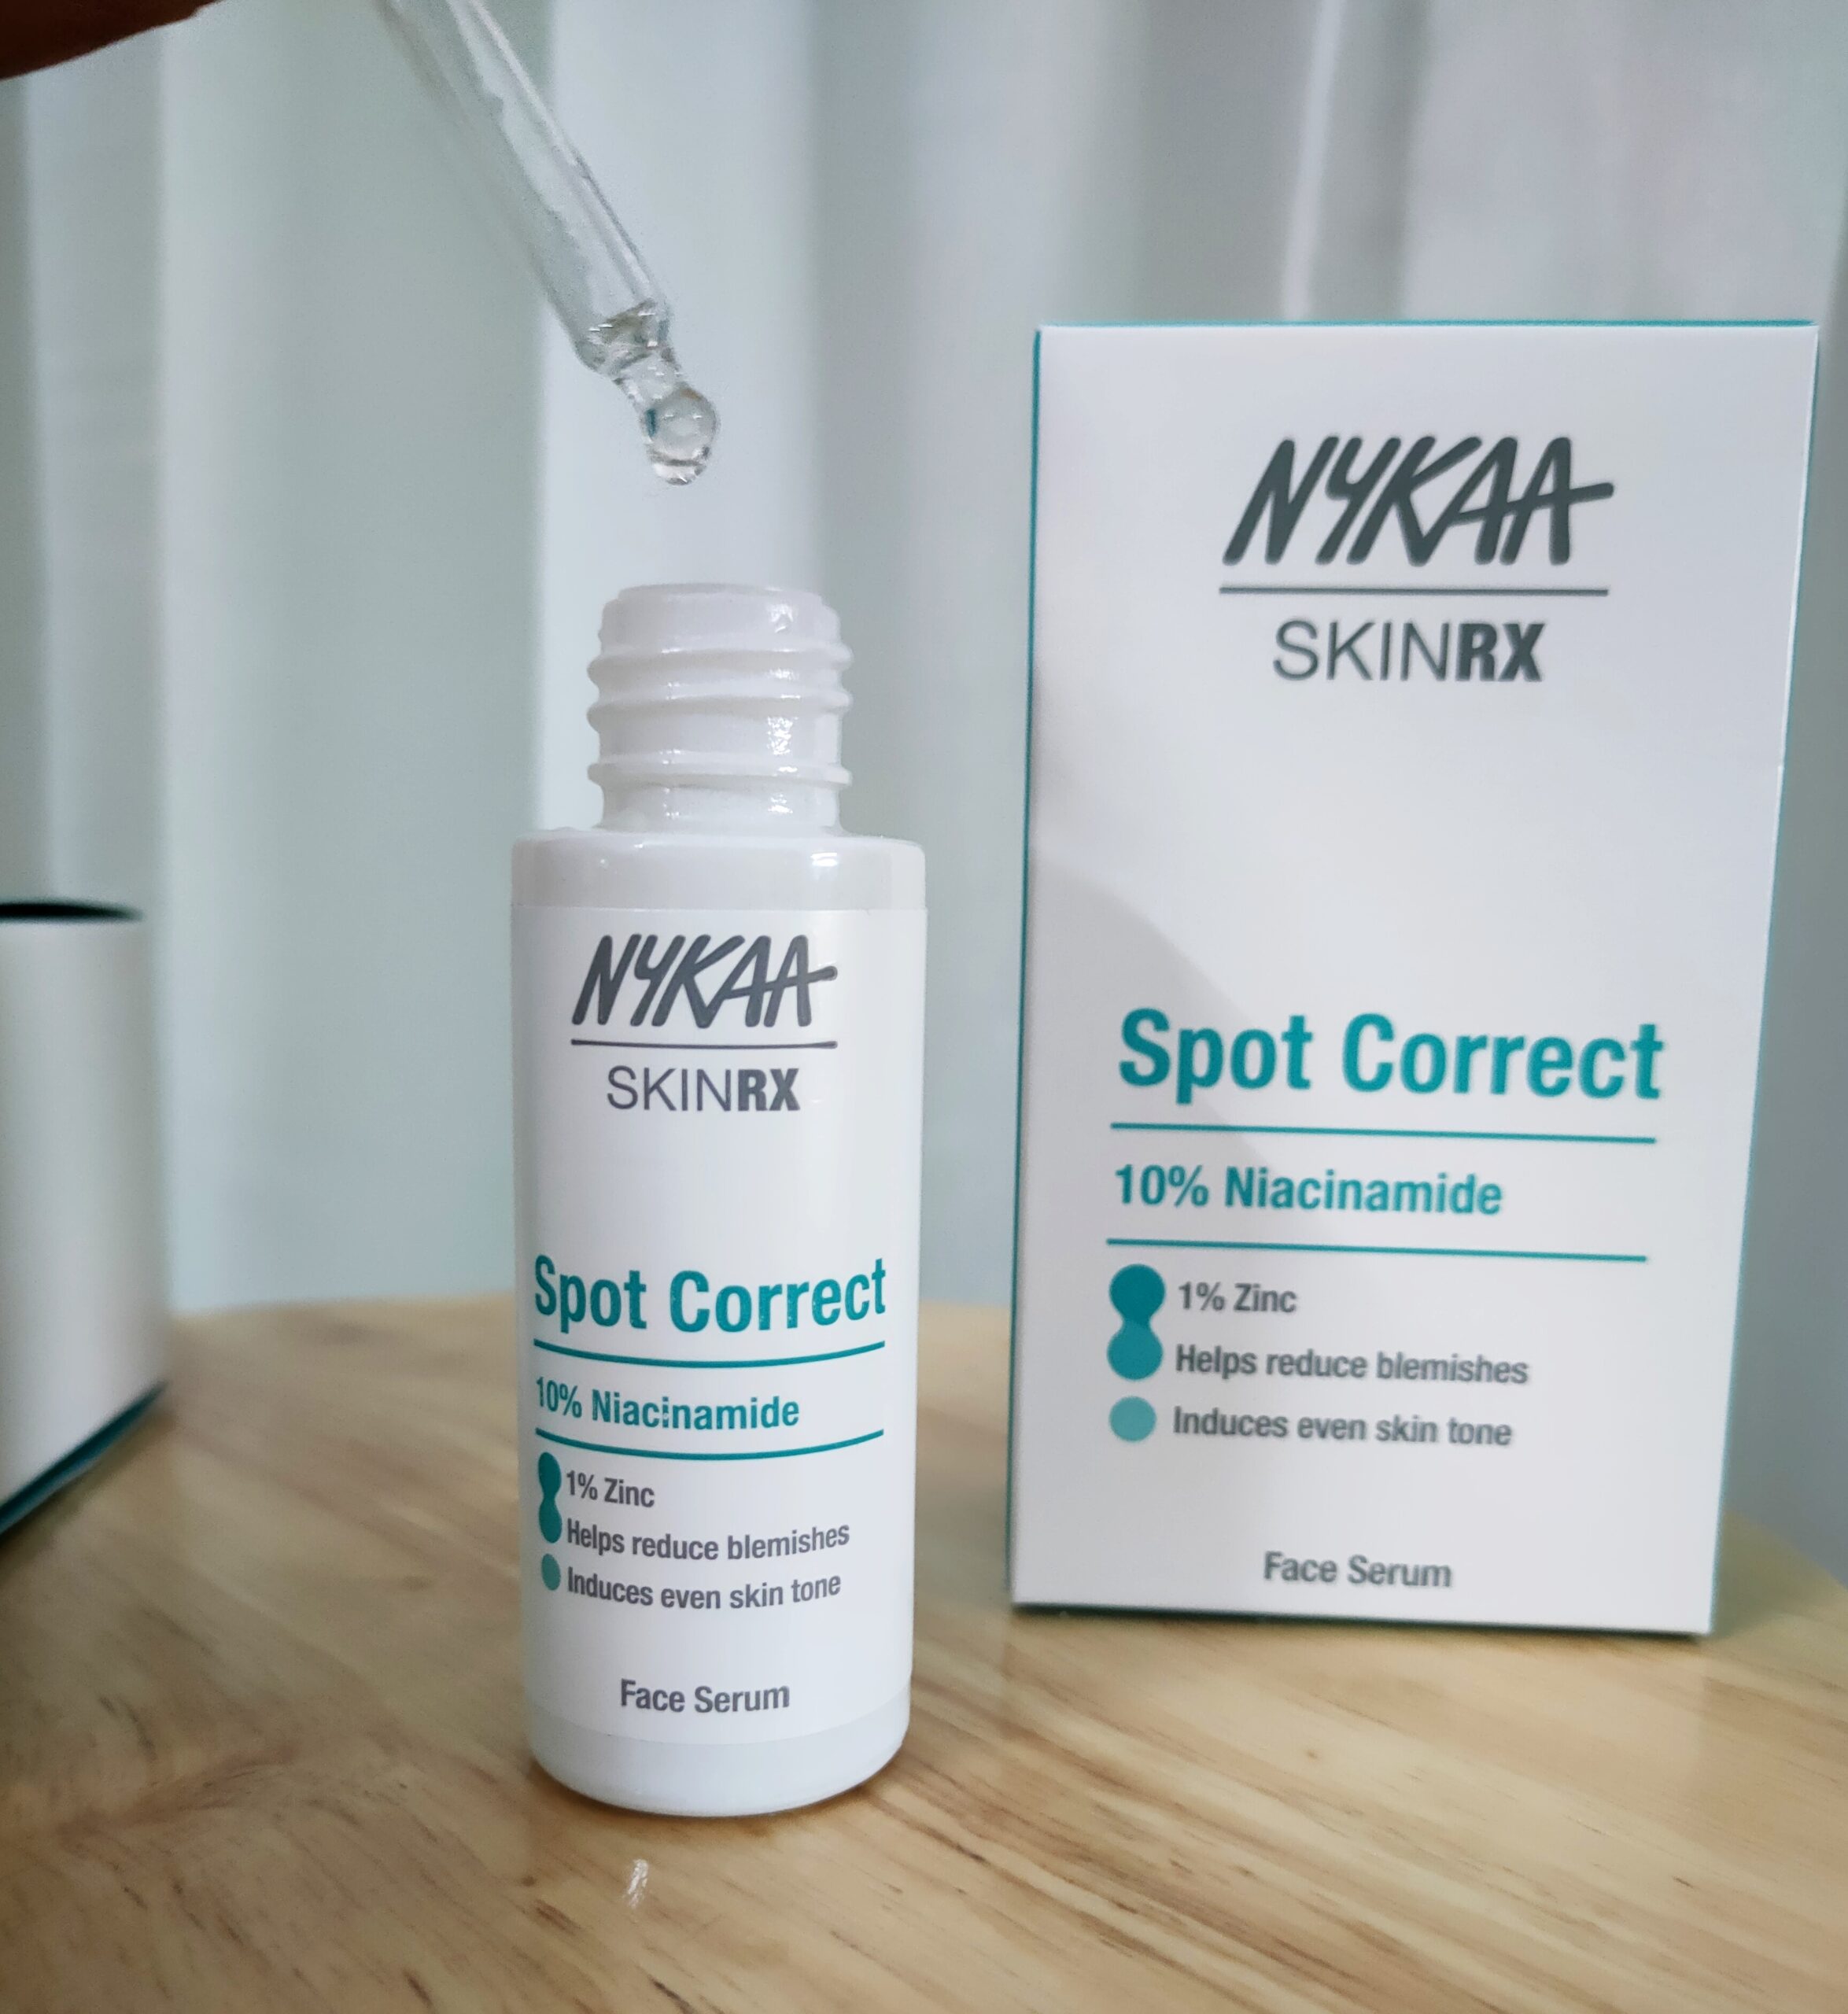 Nykaa SkinRX Spot Correct Face Serum & Moisturizer Review